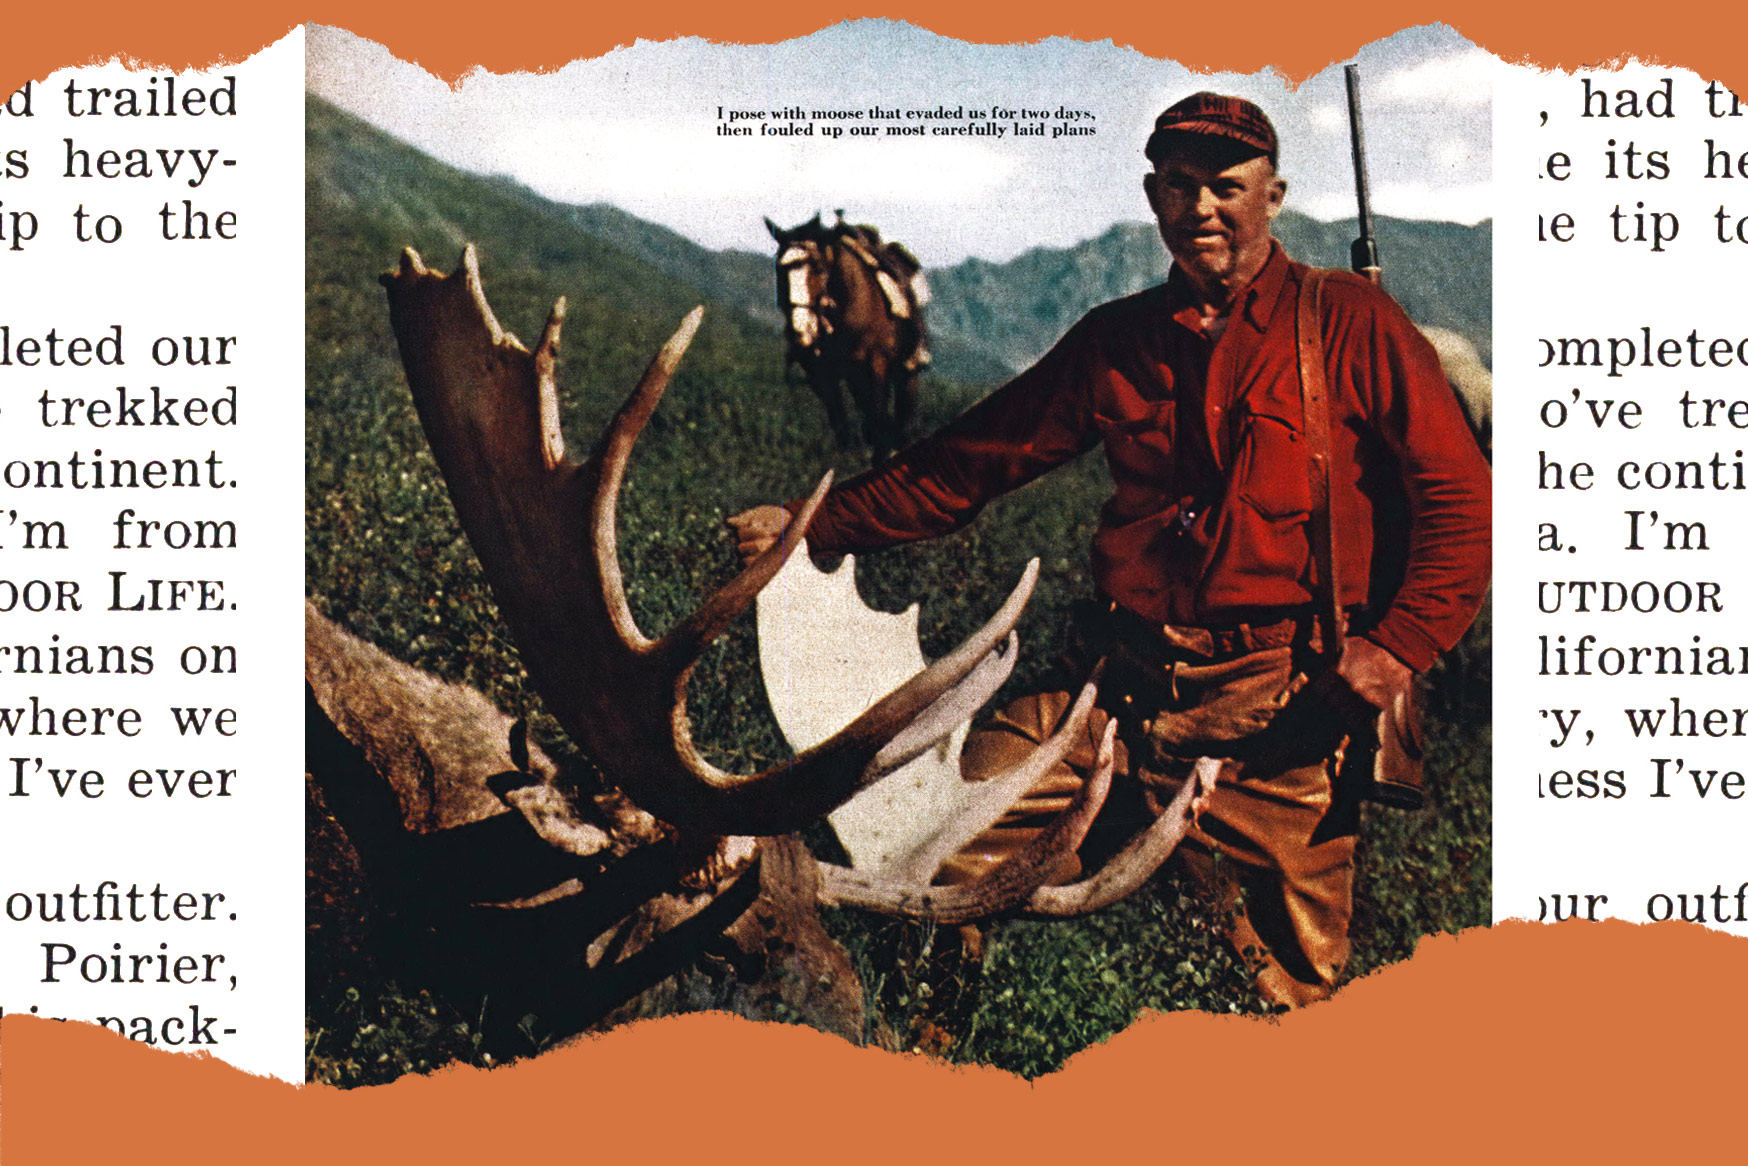 old magazine photo of author with moose